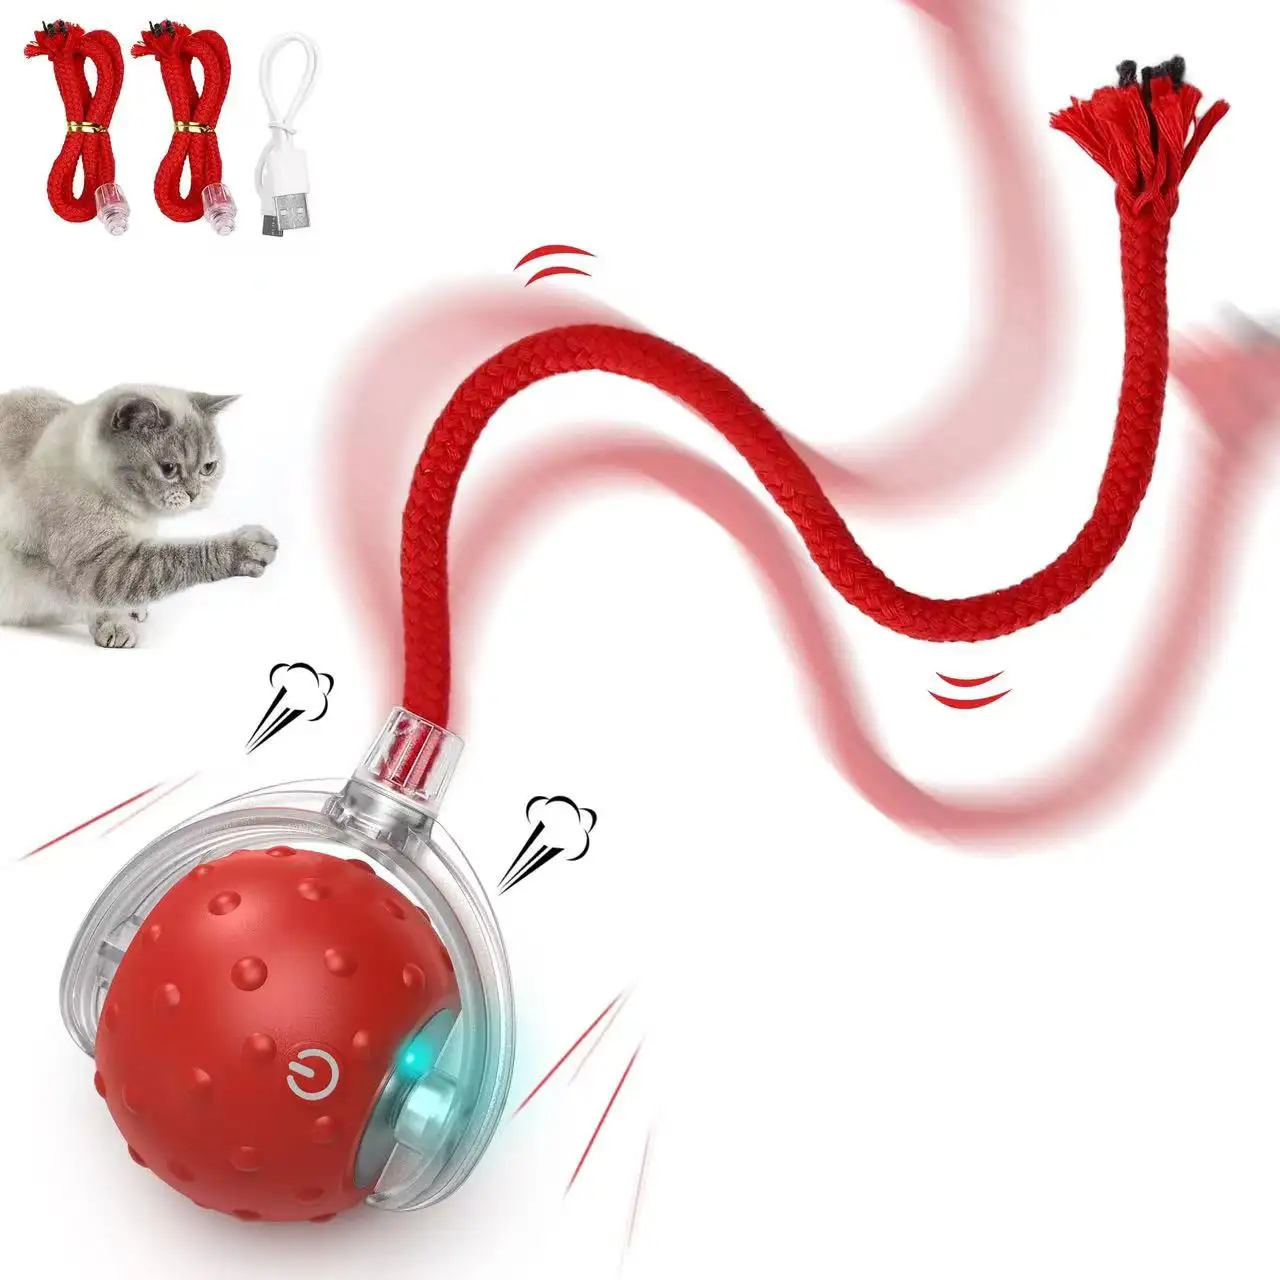 Kucing bola berguling burung Mercon interaktif mainan kucing Sensor gerak bola mainan kucing bergulir acak mainan penggoda anak kucing peliharaan ekor panjang mainan